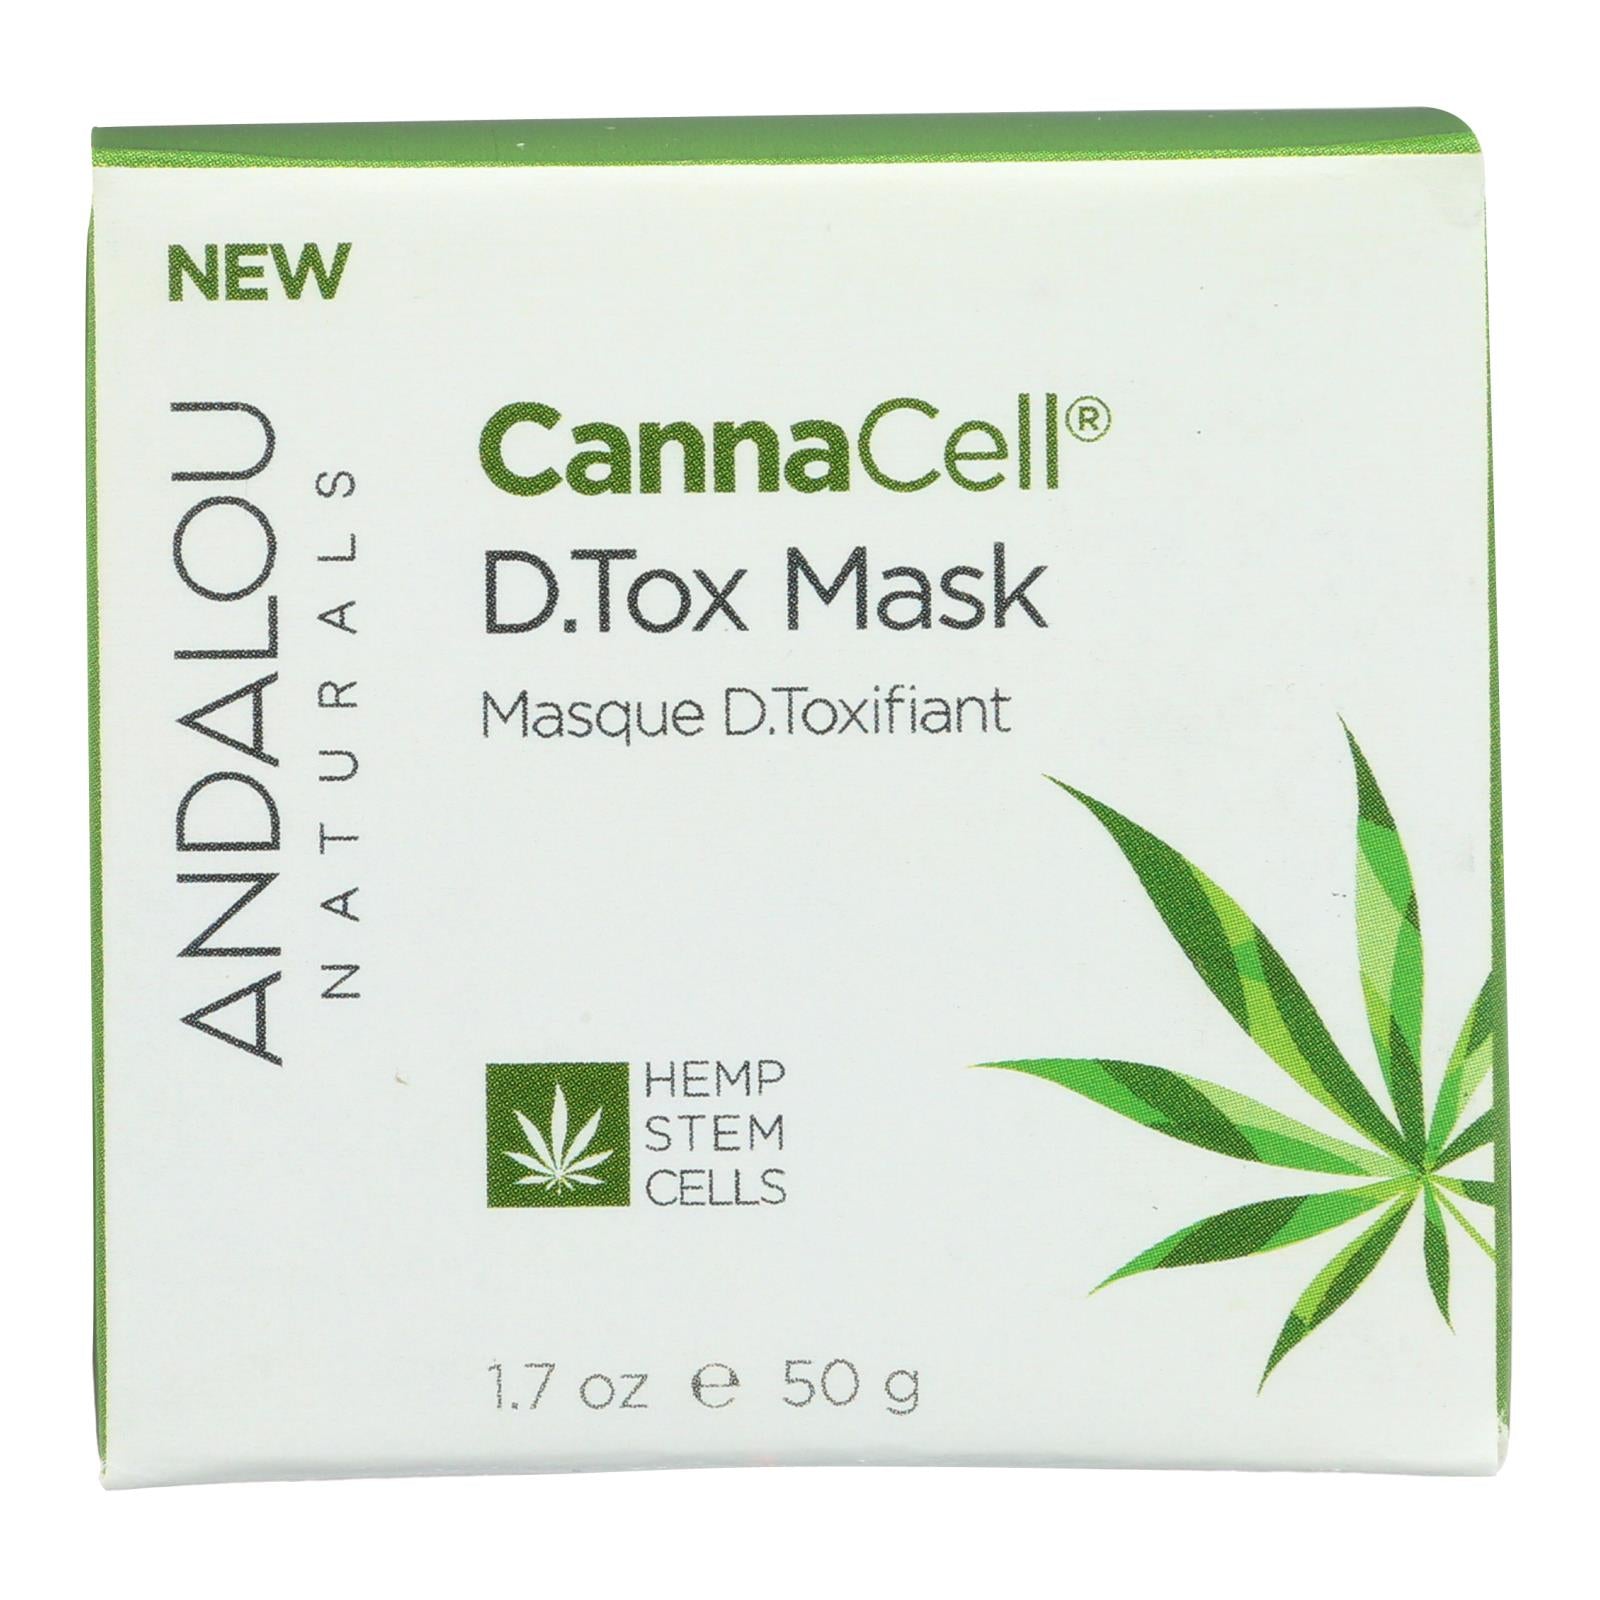 Andalou Naturals - Cannacell D.tox Mask - 1.7 Oz.